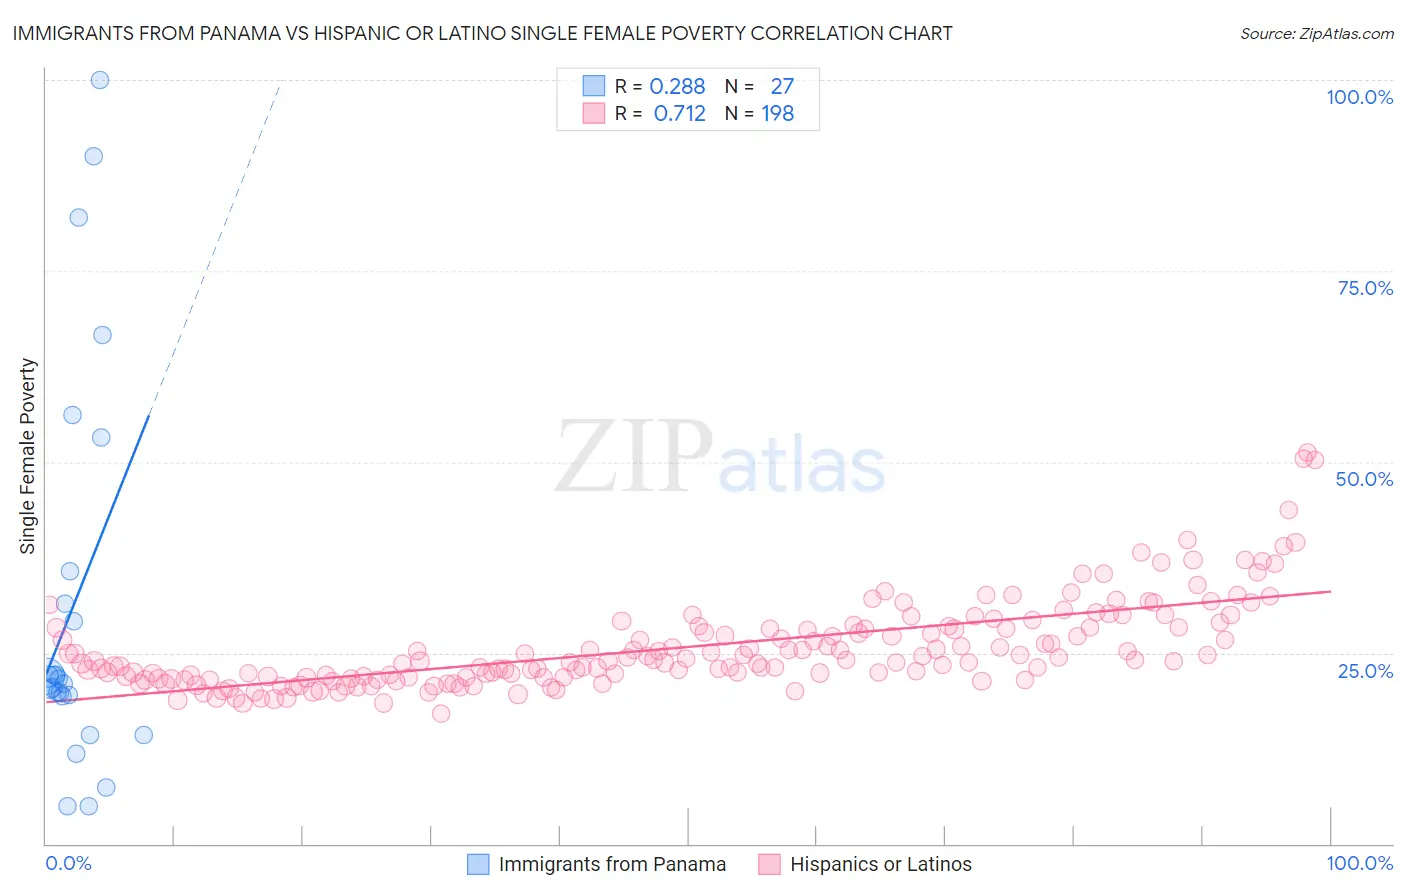 Immigrants from Panama vs Hispanic or Latino Single Female Poverty